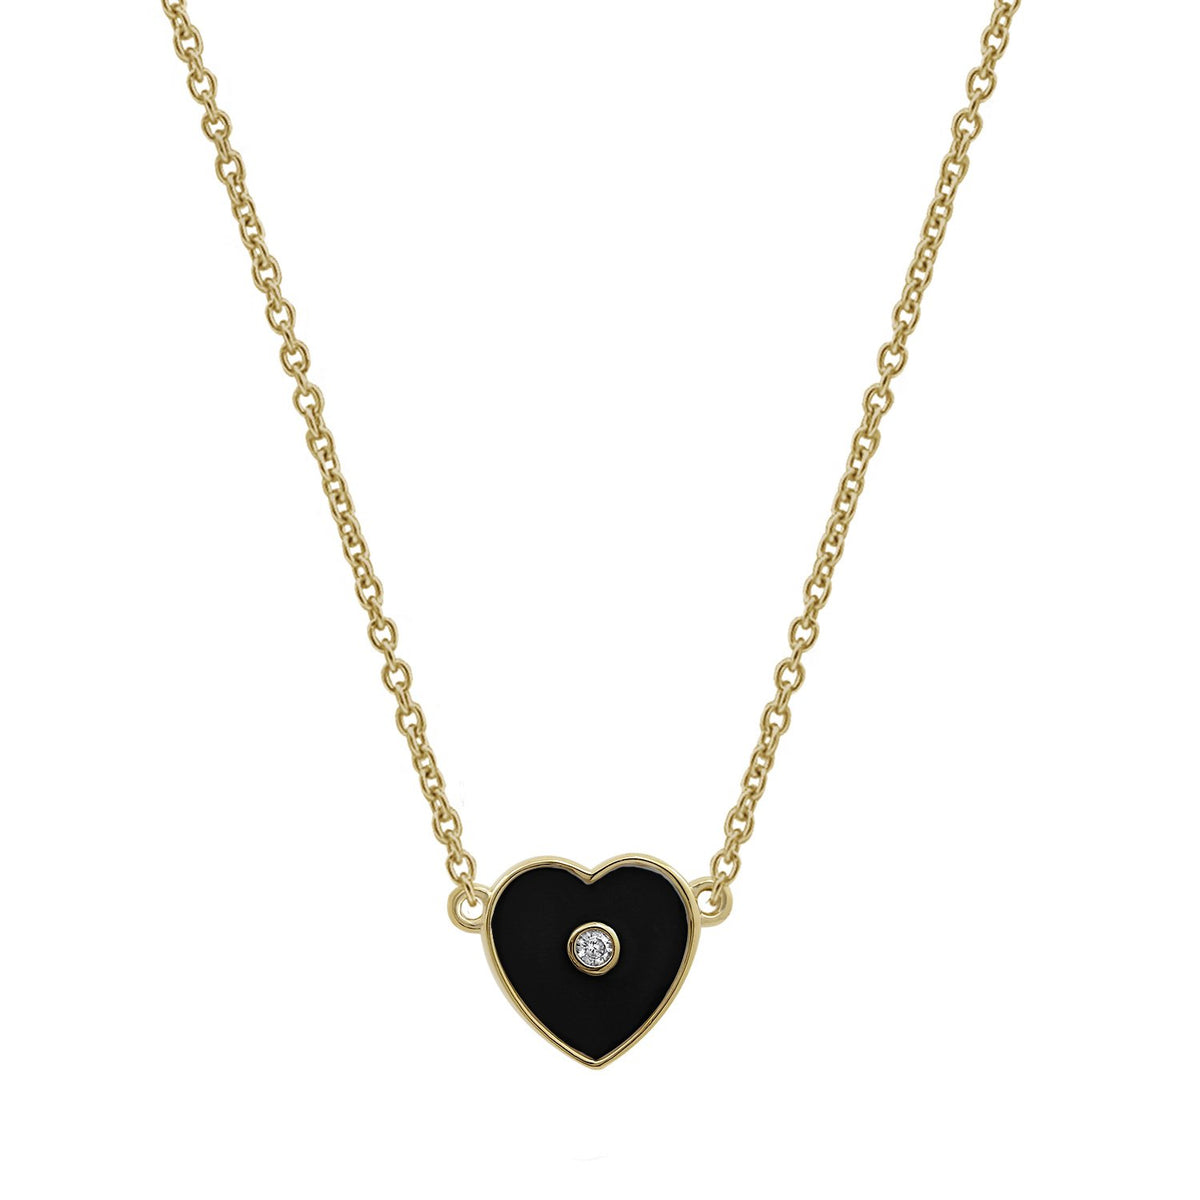 Black Enamel Heart Pendant Necklace with Accent